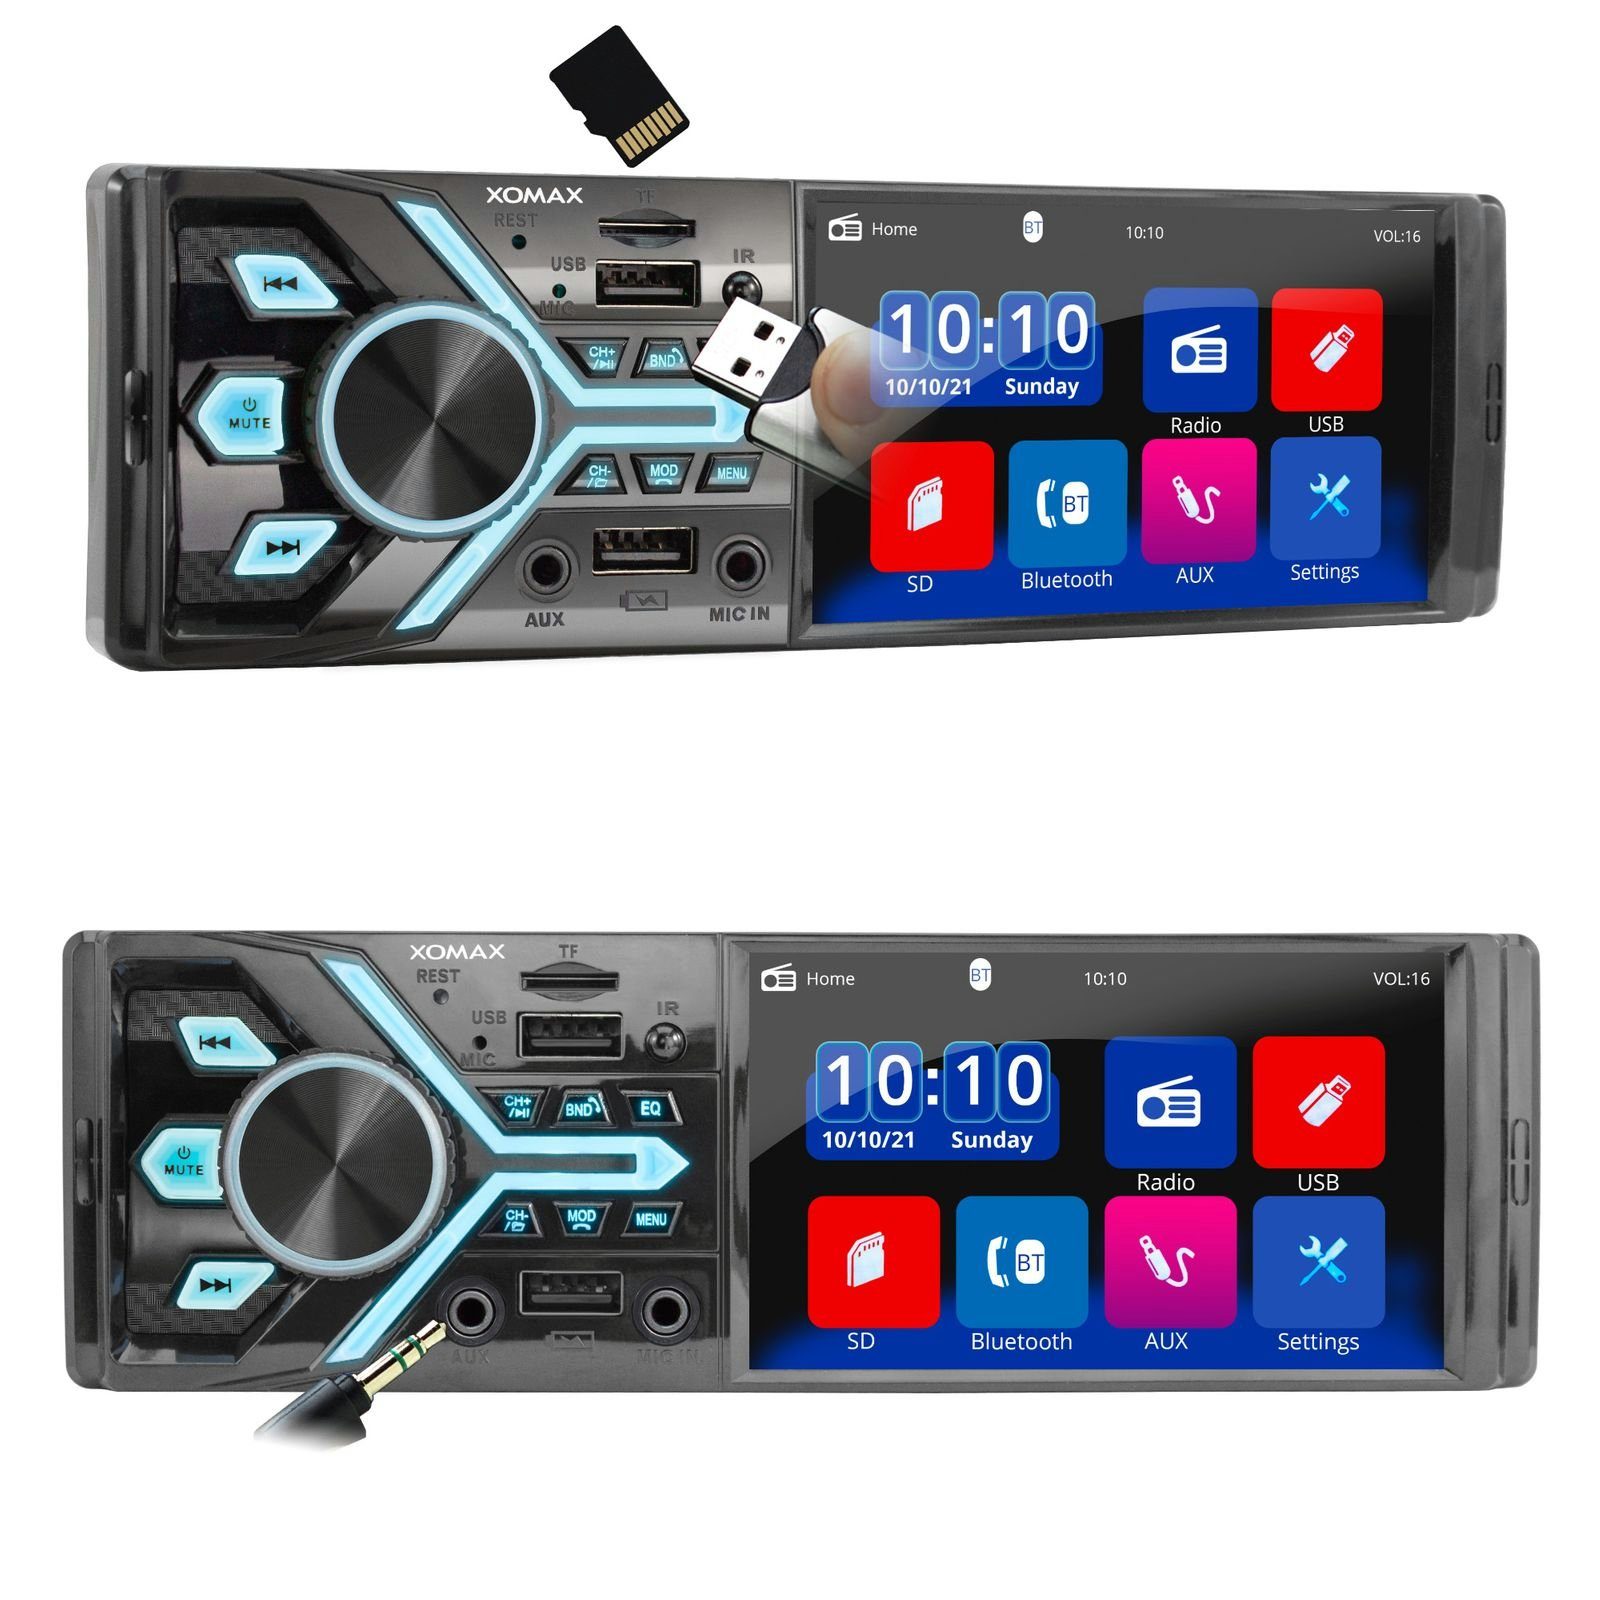 1 Bildschirm, Autoradio mit XM-V424 SD, 2x 4 Bluetooth, USB, XOMAX DIN Autoradio Zoll